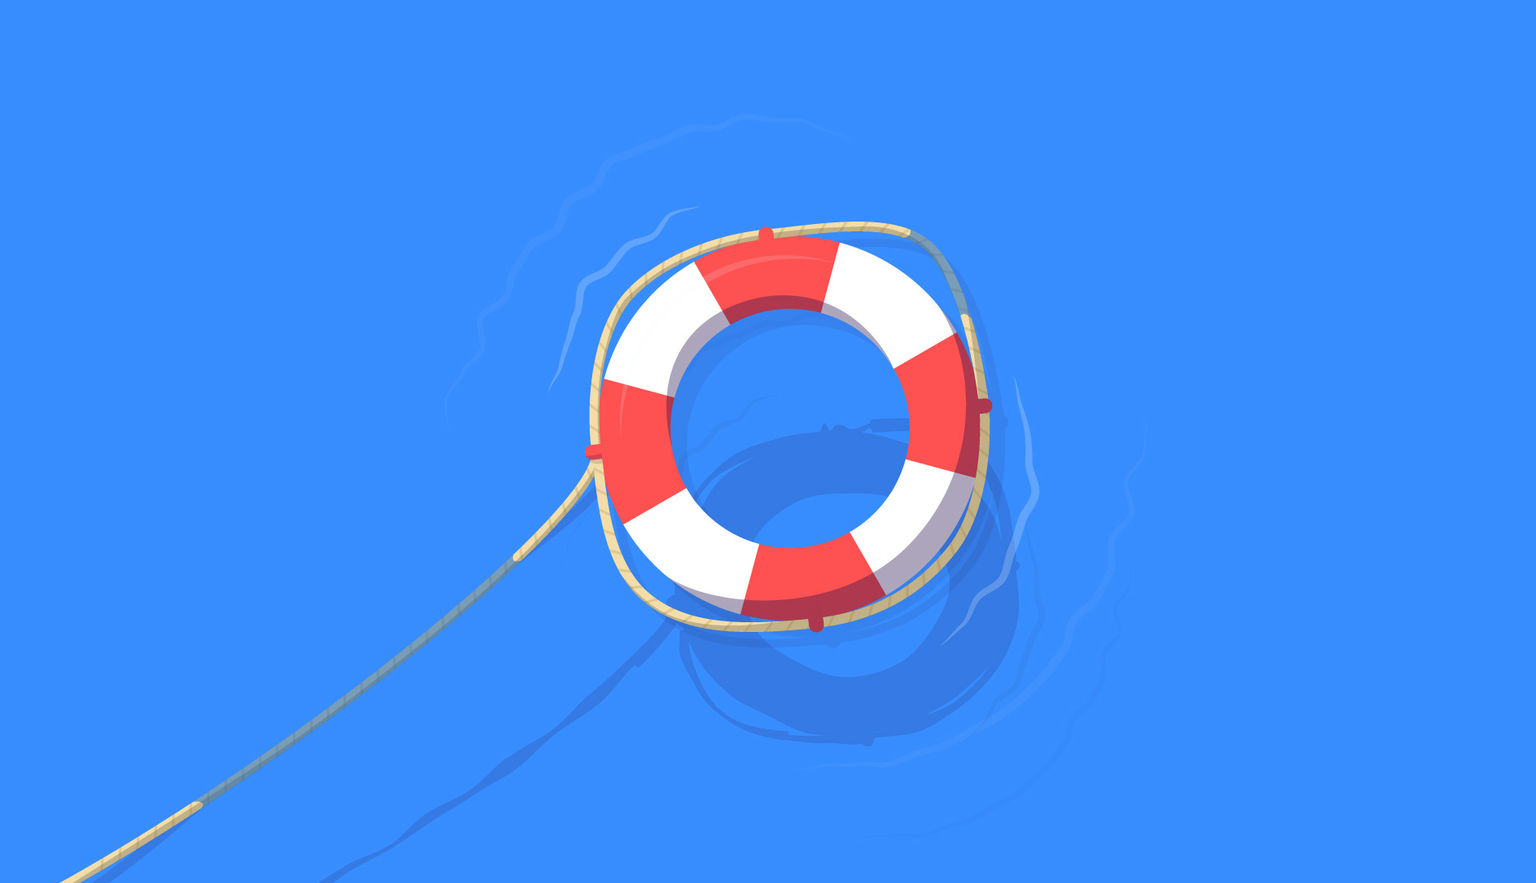 Lifebuoy ring in water